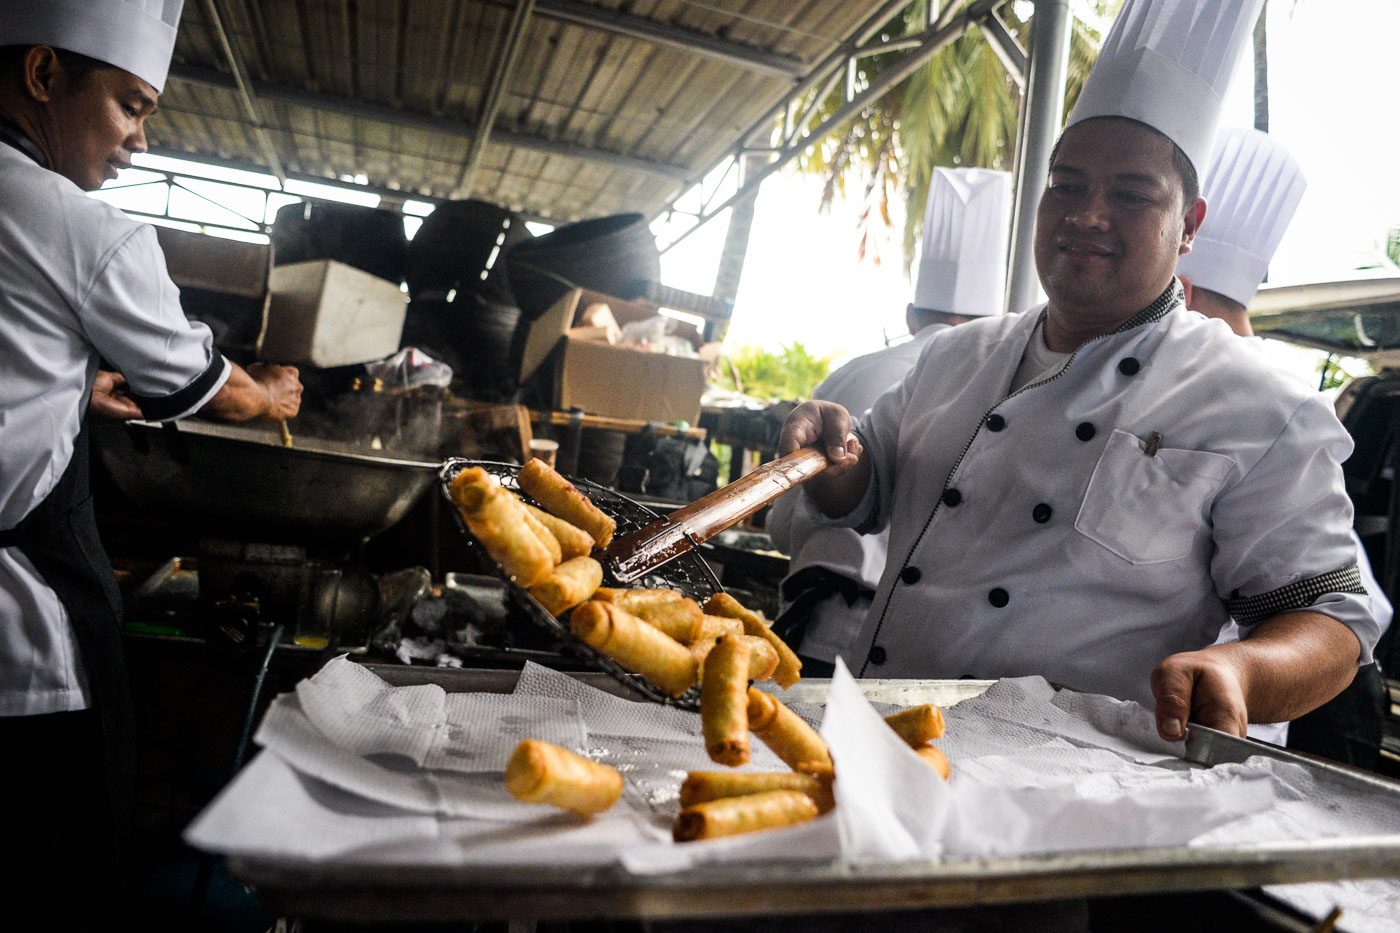 IN PHOTOS: Food preps before Rodrigo Duterte’s presidential inauguration